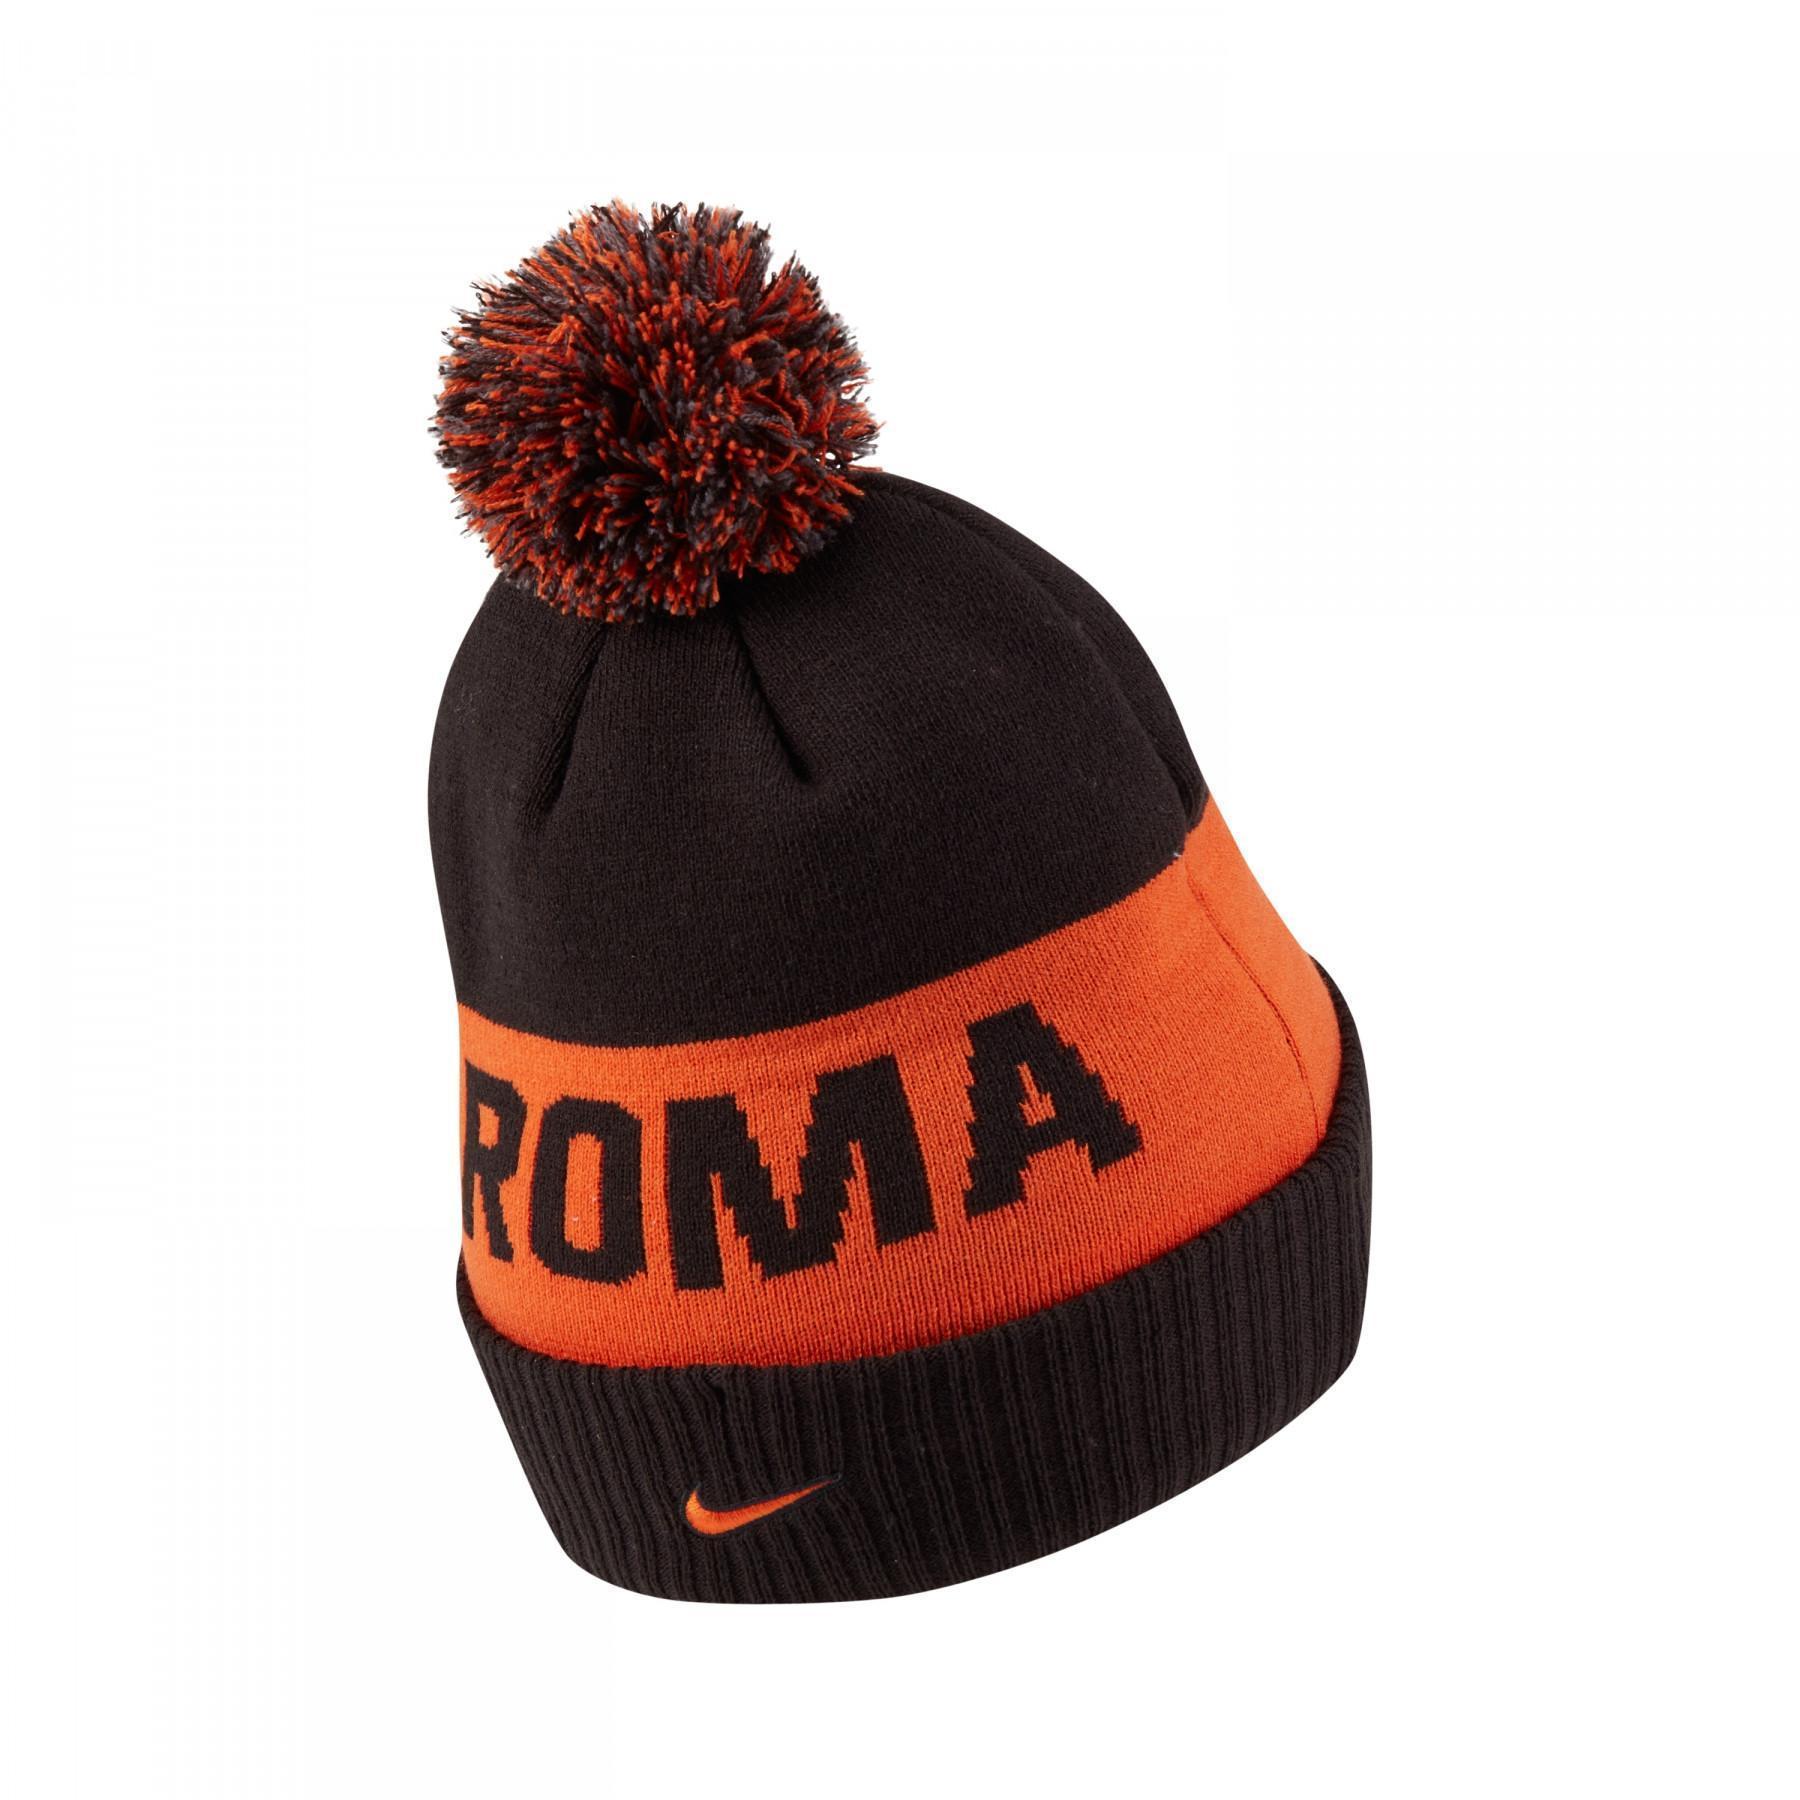 Bonnet met pompon AS Roma 2020/21